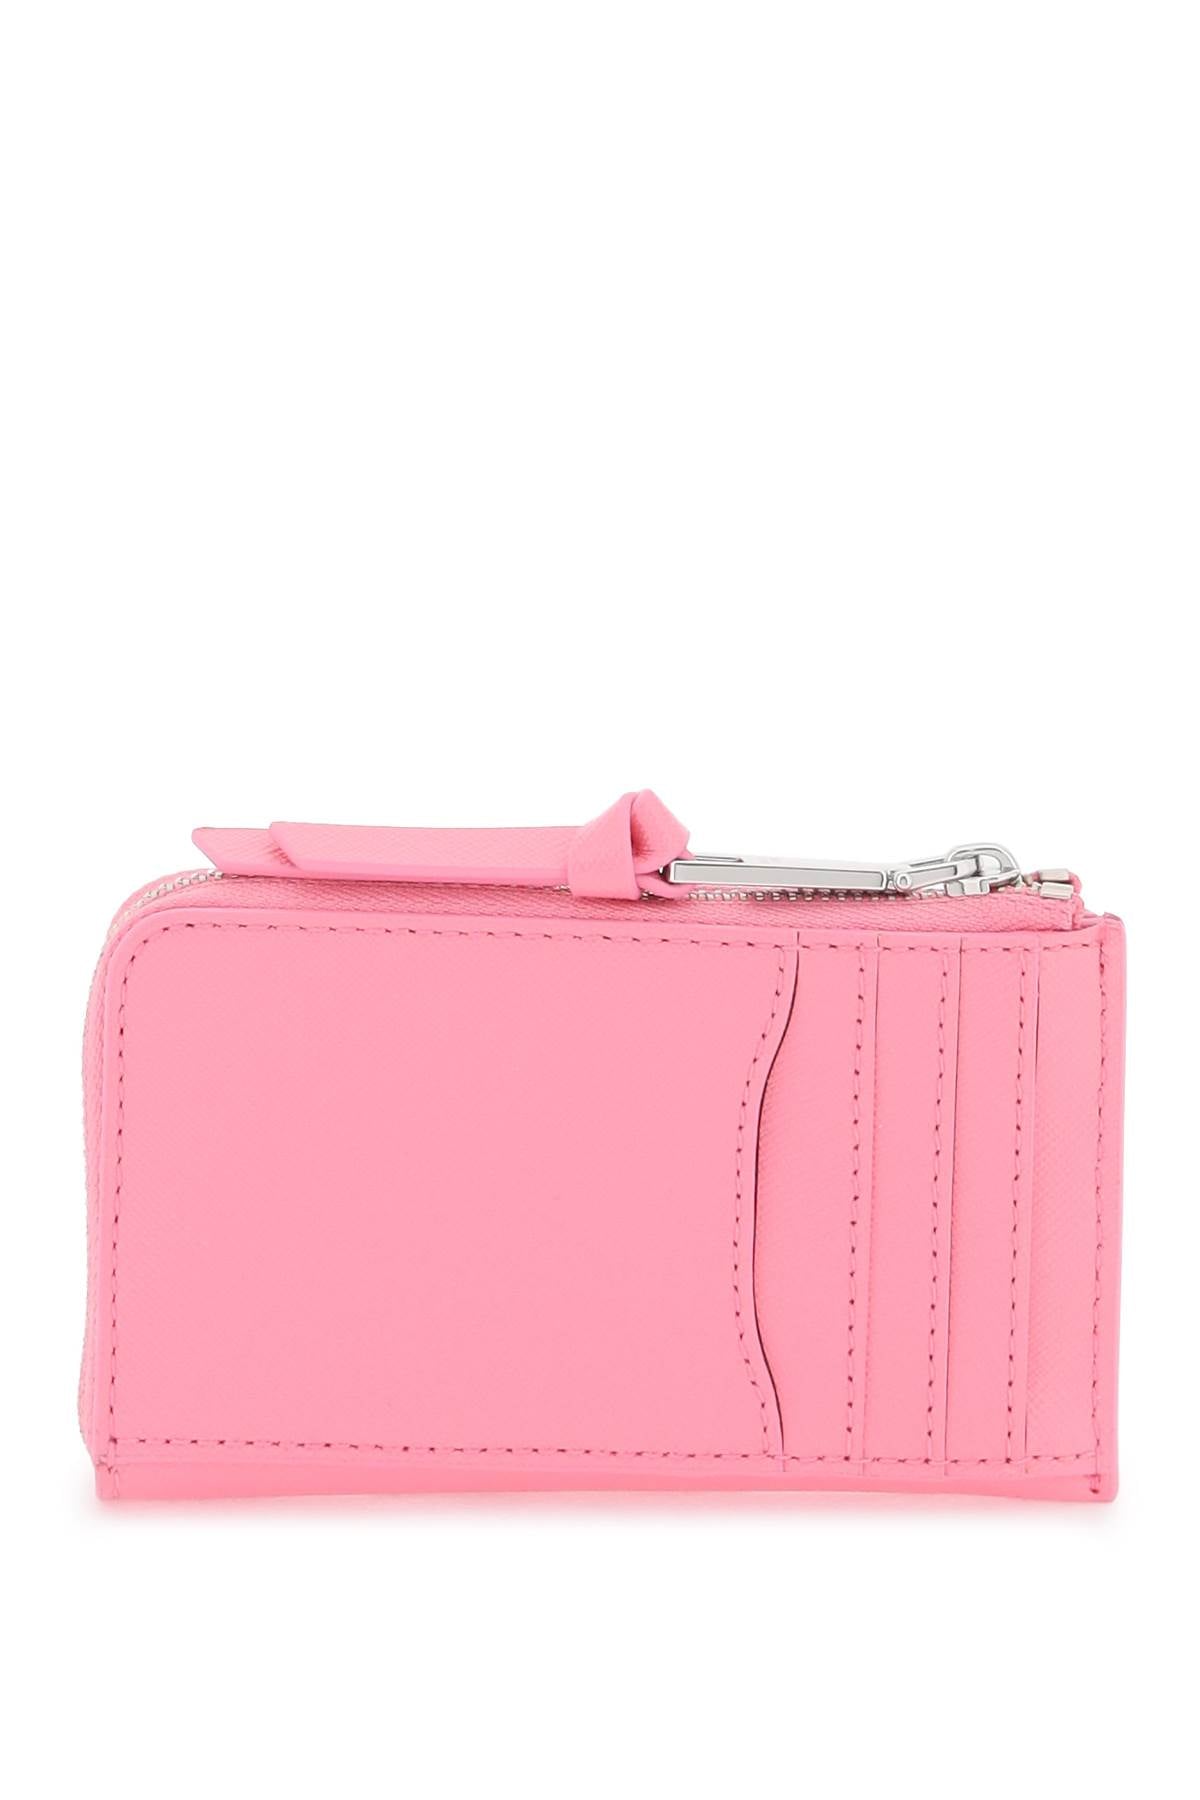 Marc Jacobs The Utility Snapshot Top Zip Multi Wallet   Pink